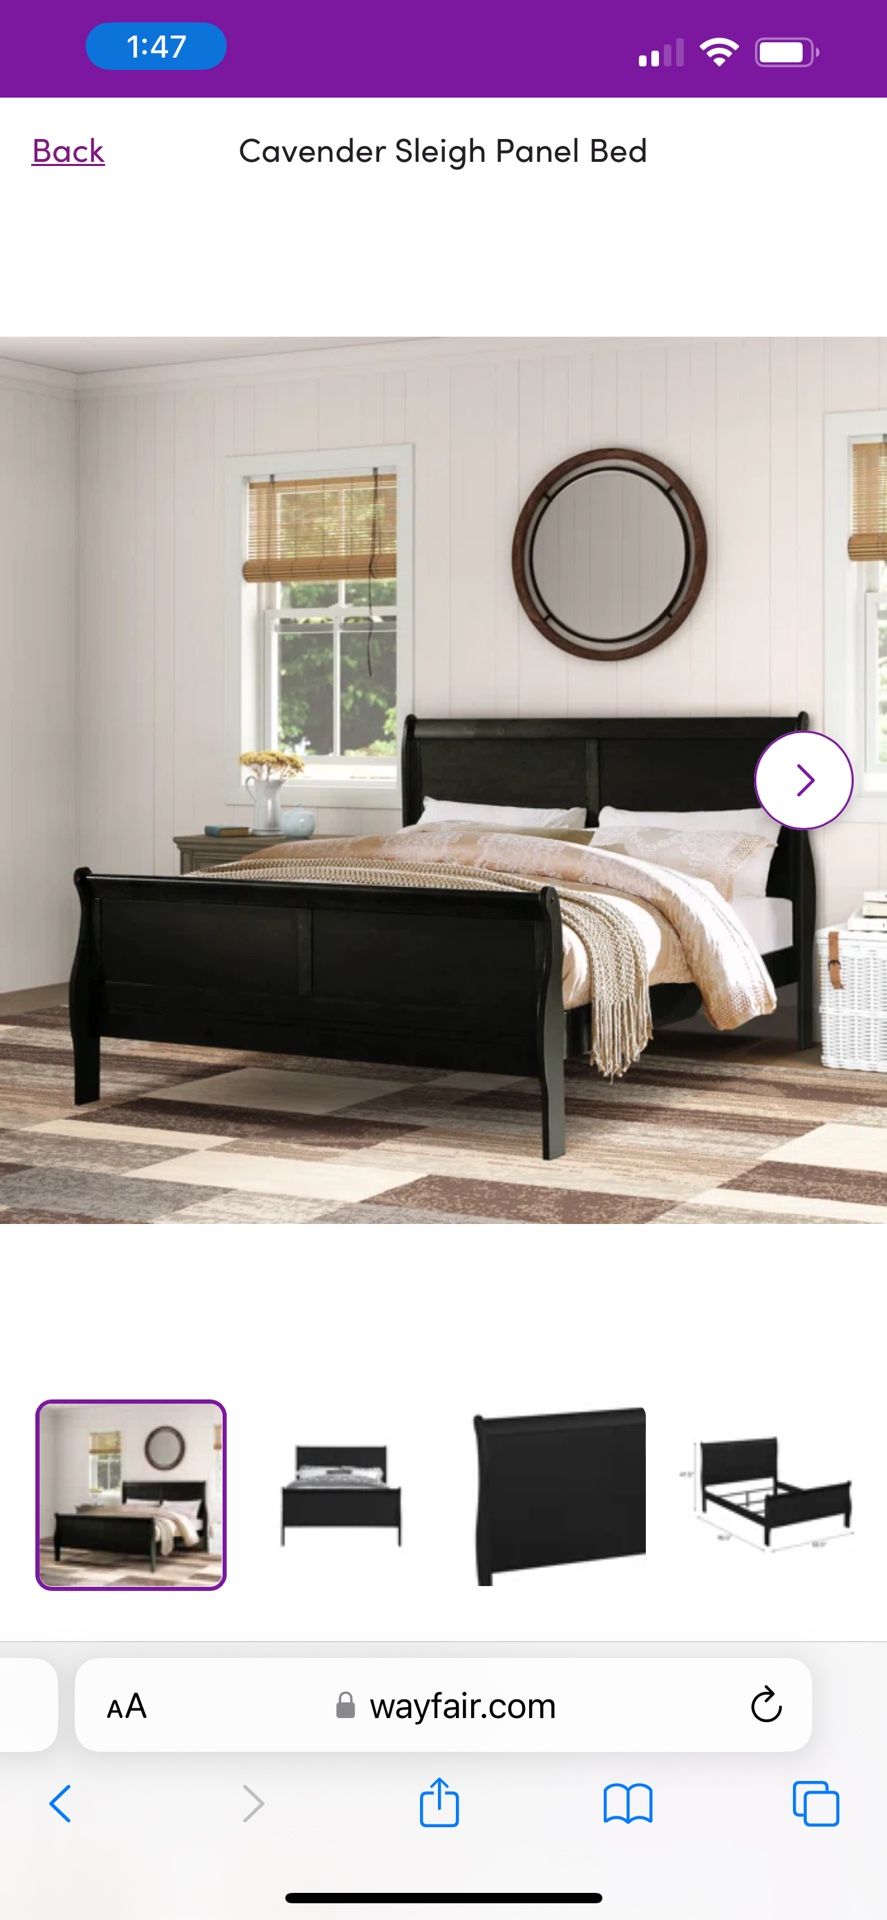 Black 3 Piece Solid Wood Bedroom Set